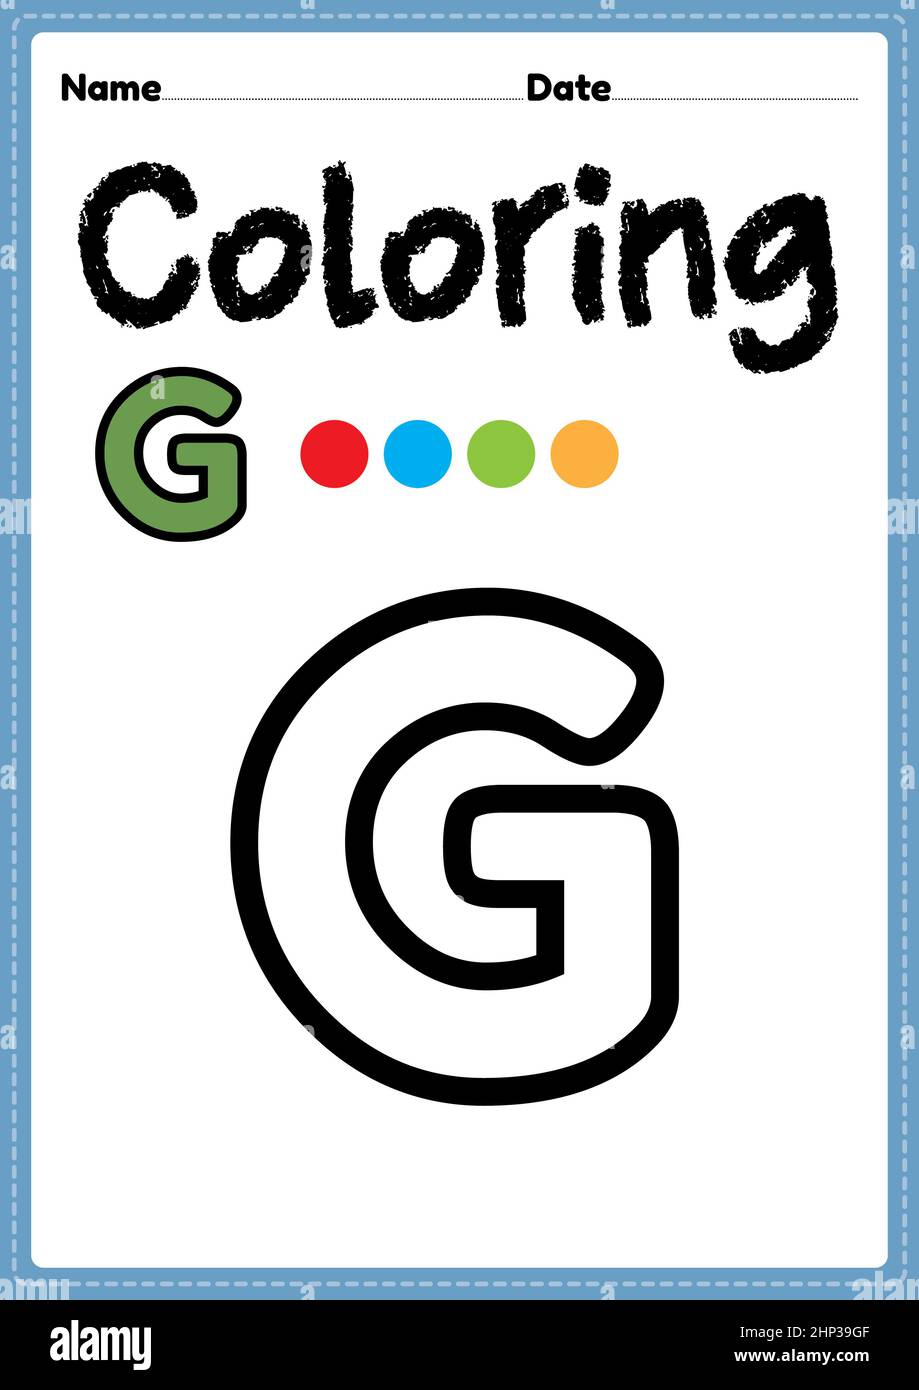 alphabet letters coloring pages g